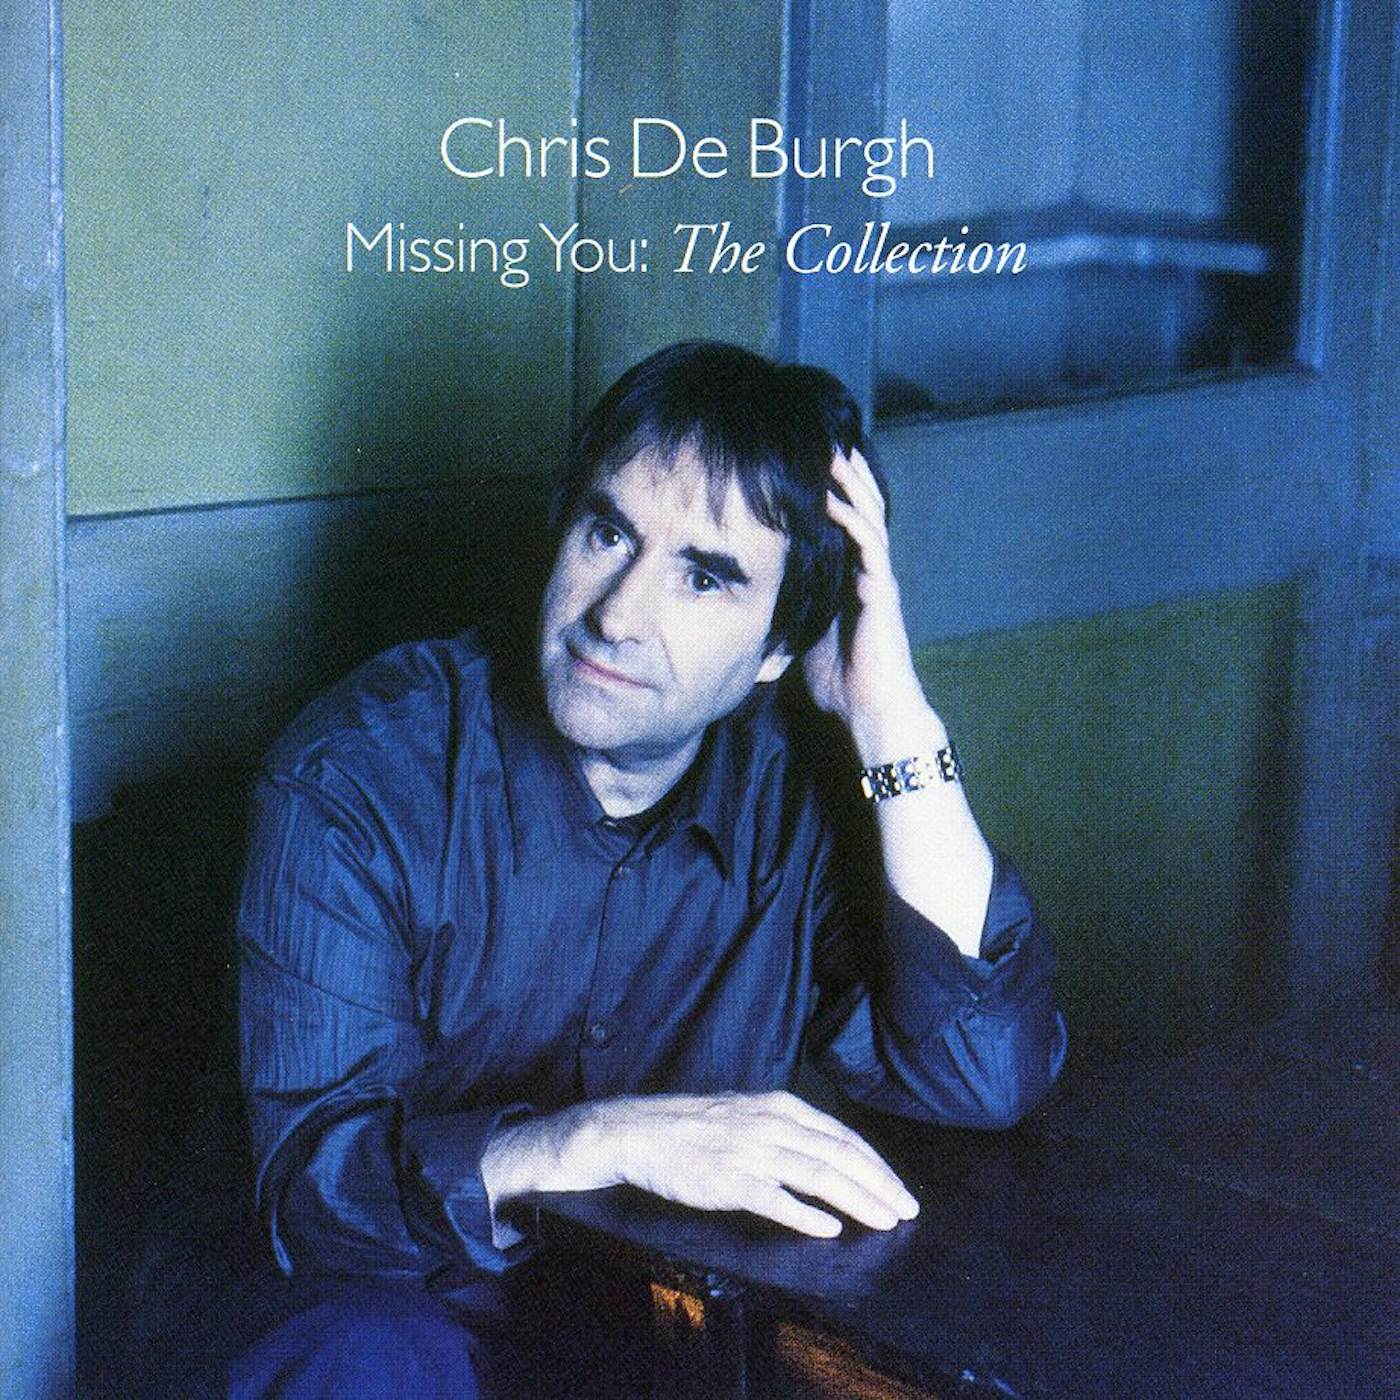 Chris de Burgh MISSING YOU: COLLECTION CD